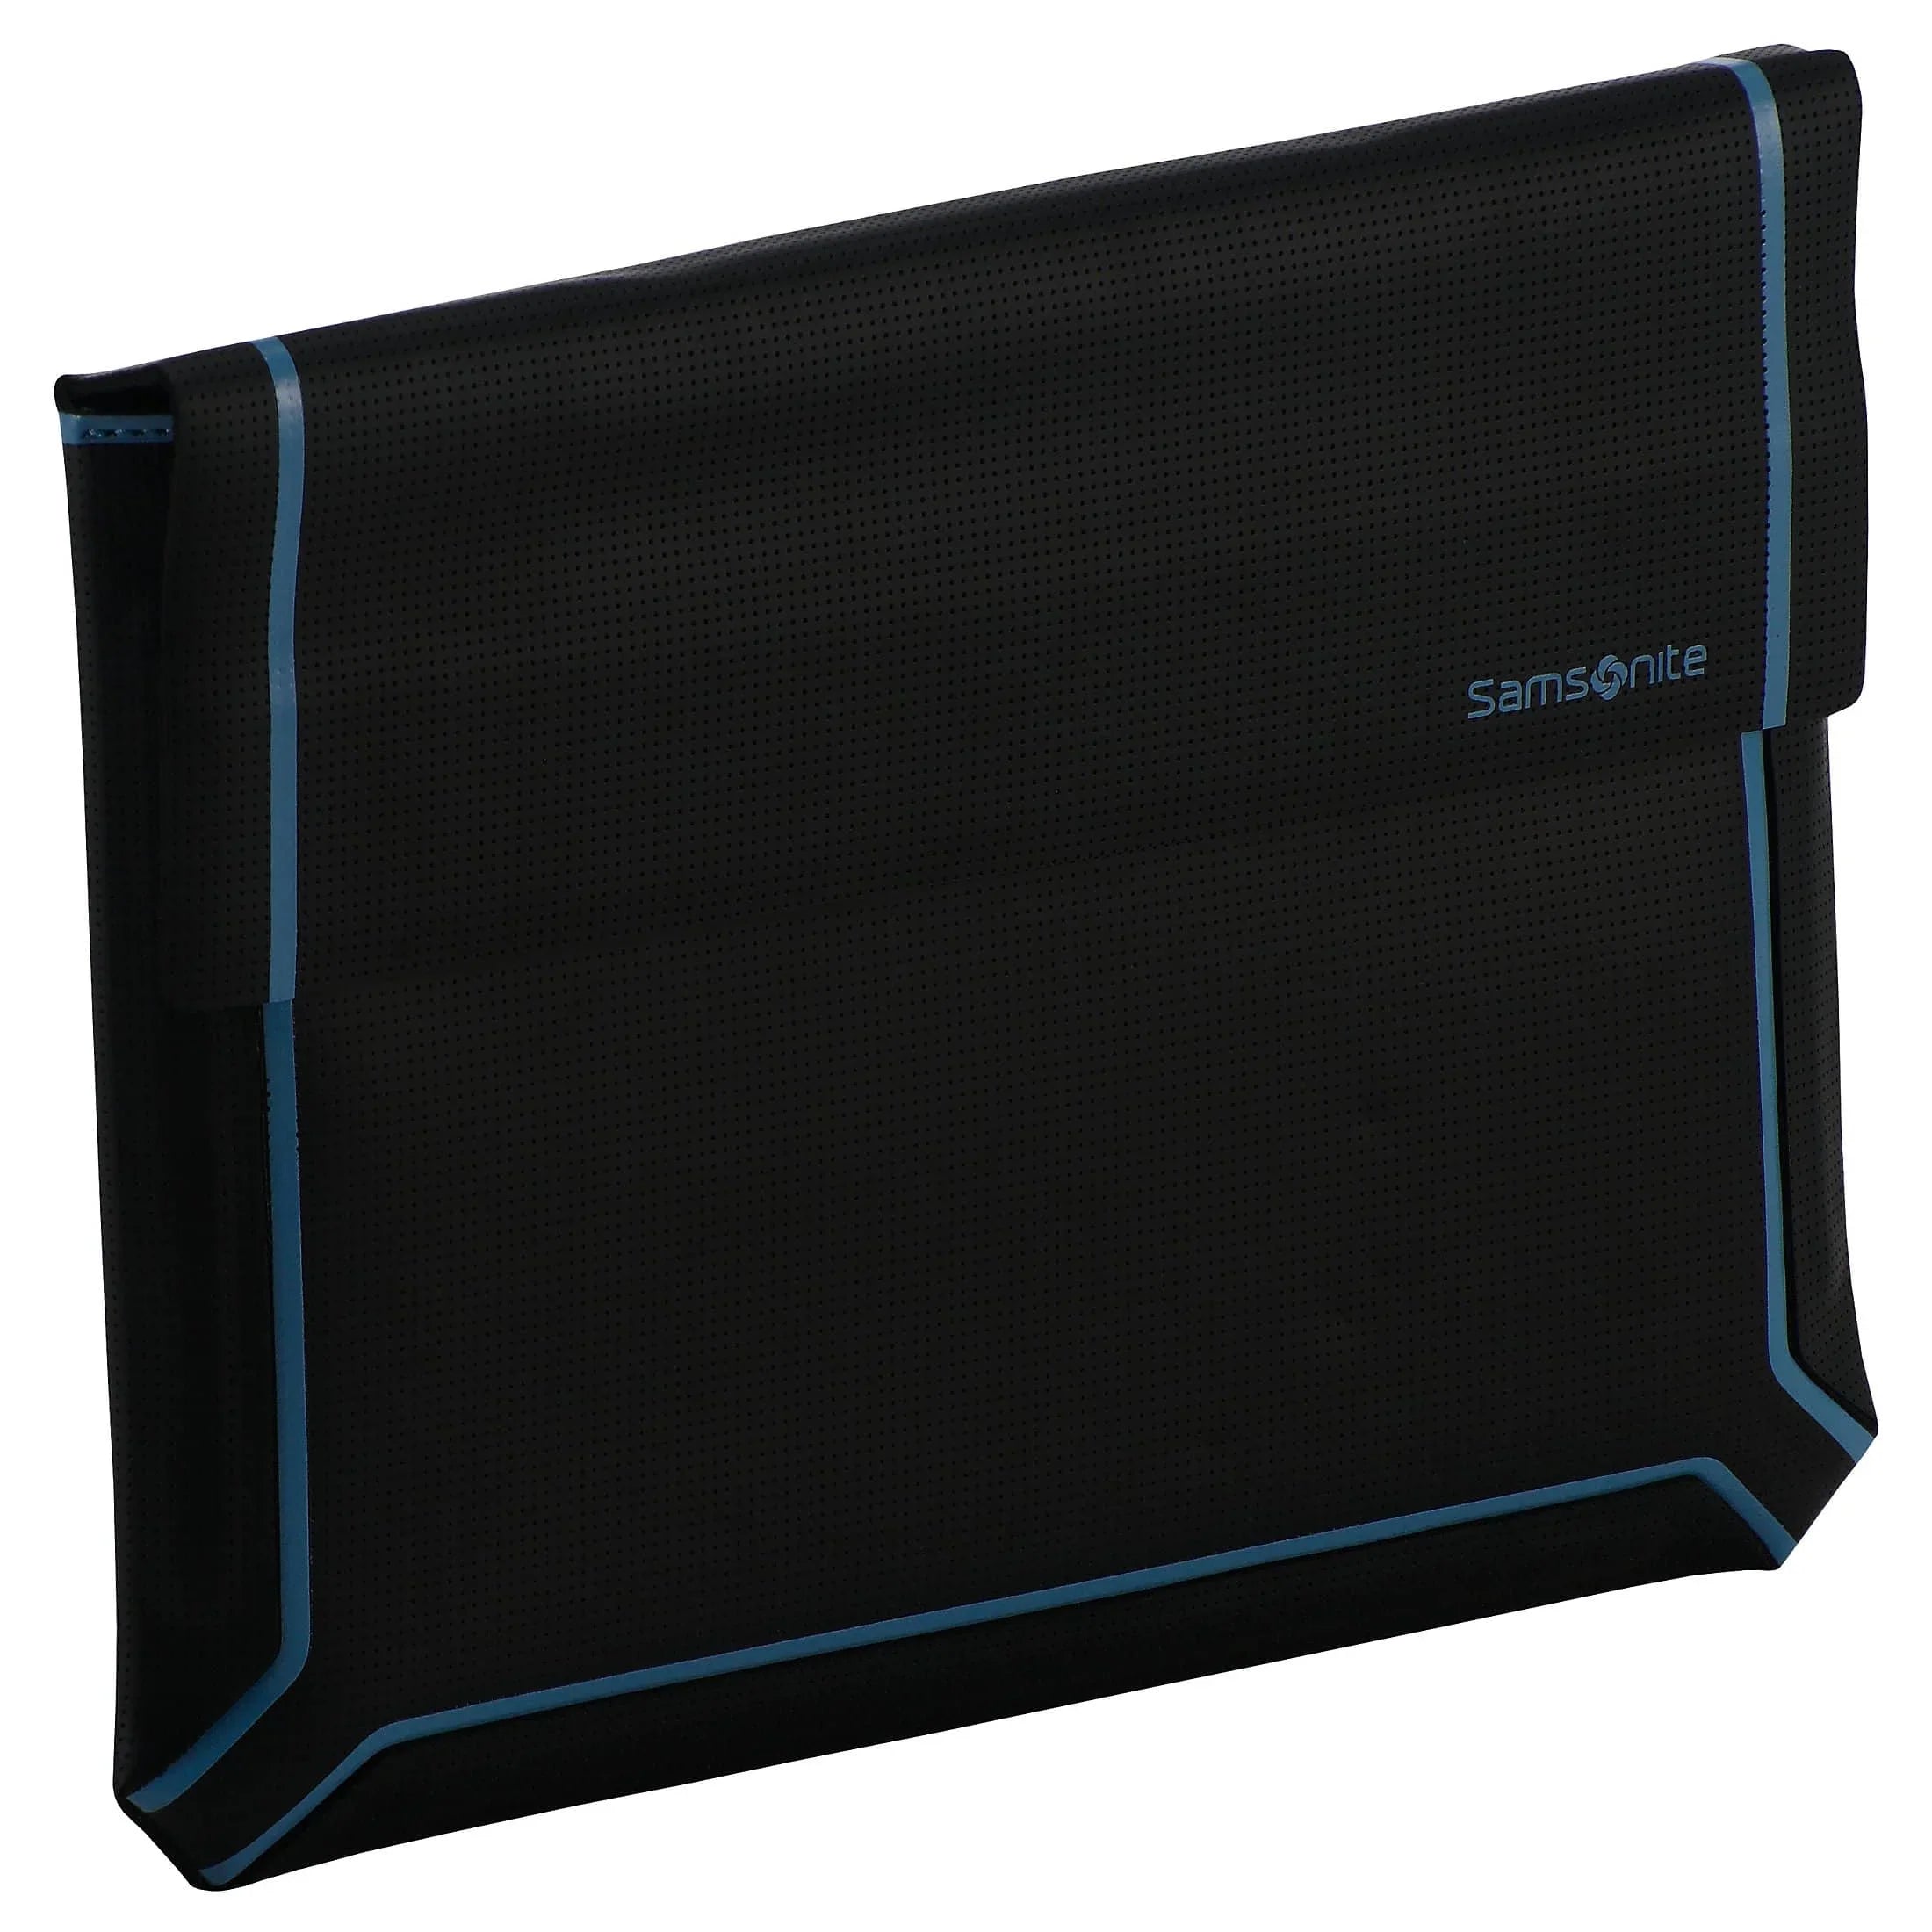 Samsonite Thermo Tech Laptophülle 28 cm - black/light blue